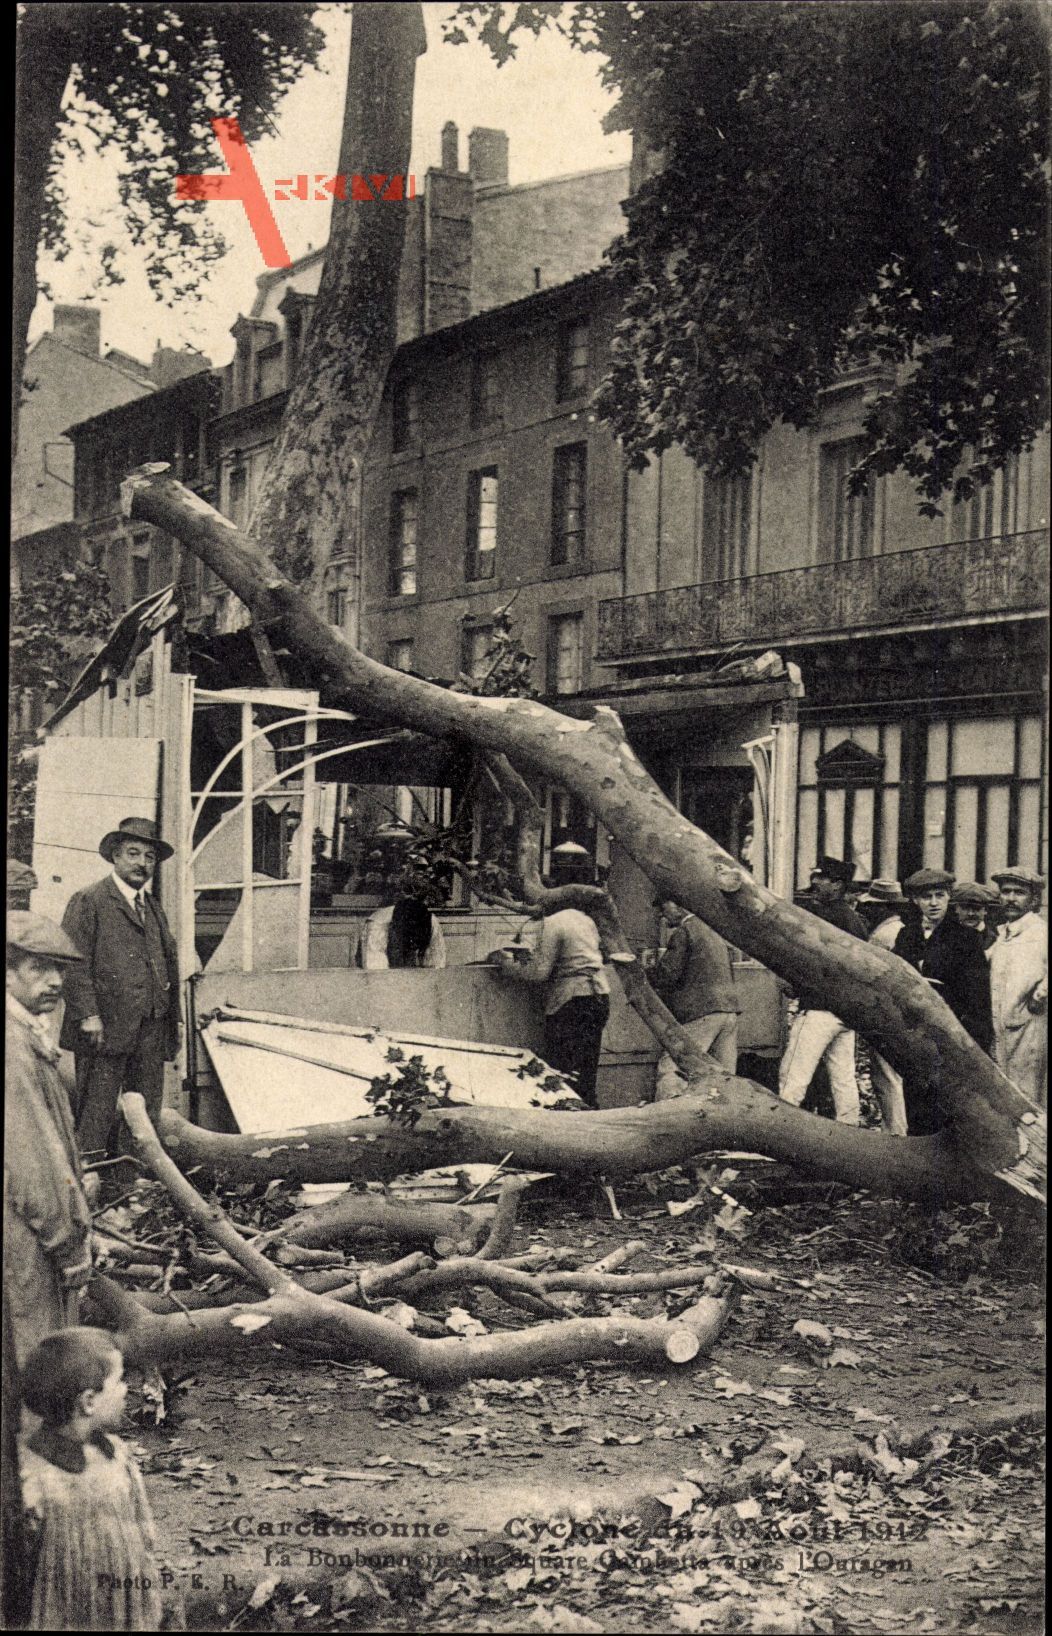 Carcassonne Aude, Cyclone du 19 Aout 1912, umgestürzter Baum, Sturm